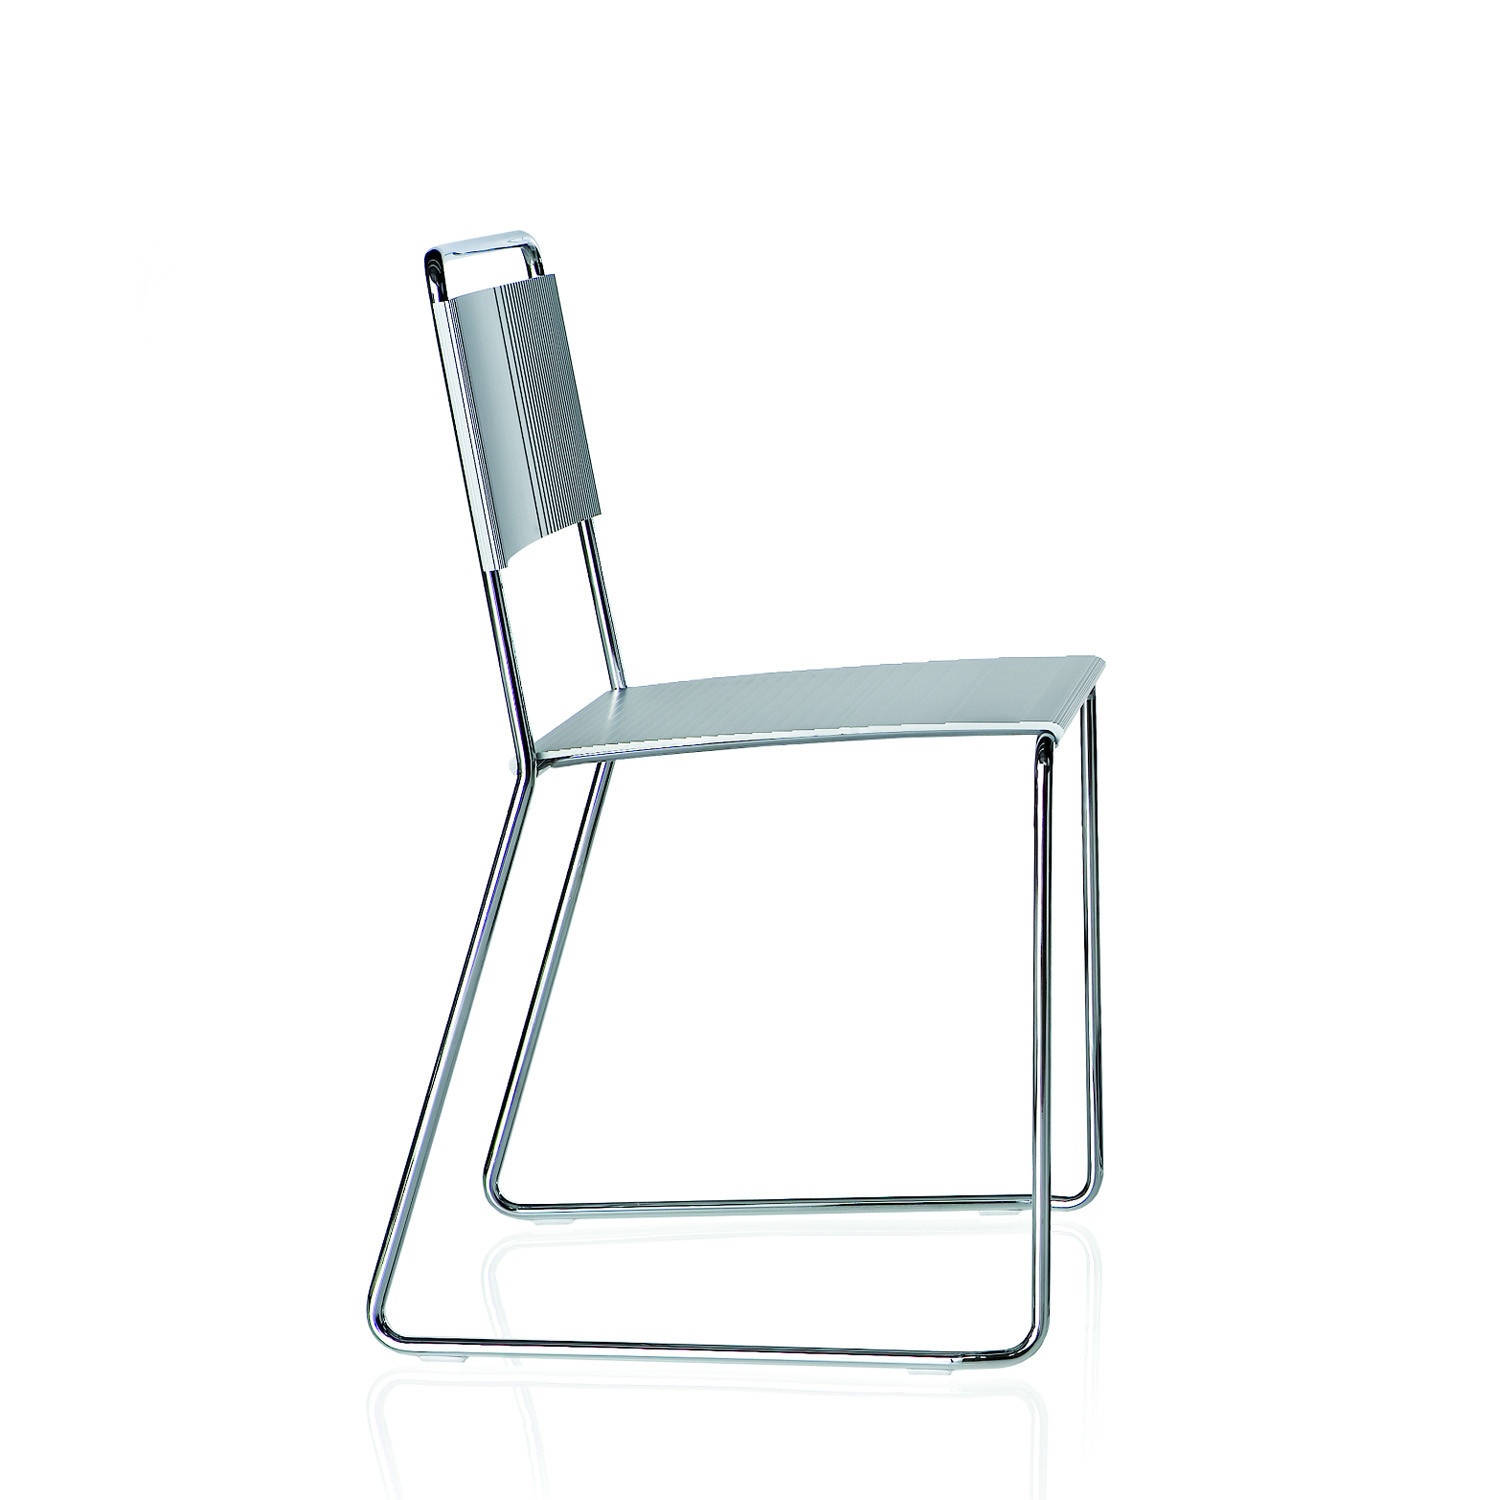 Estrosa Chair designed by Setacomincini